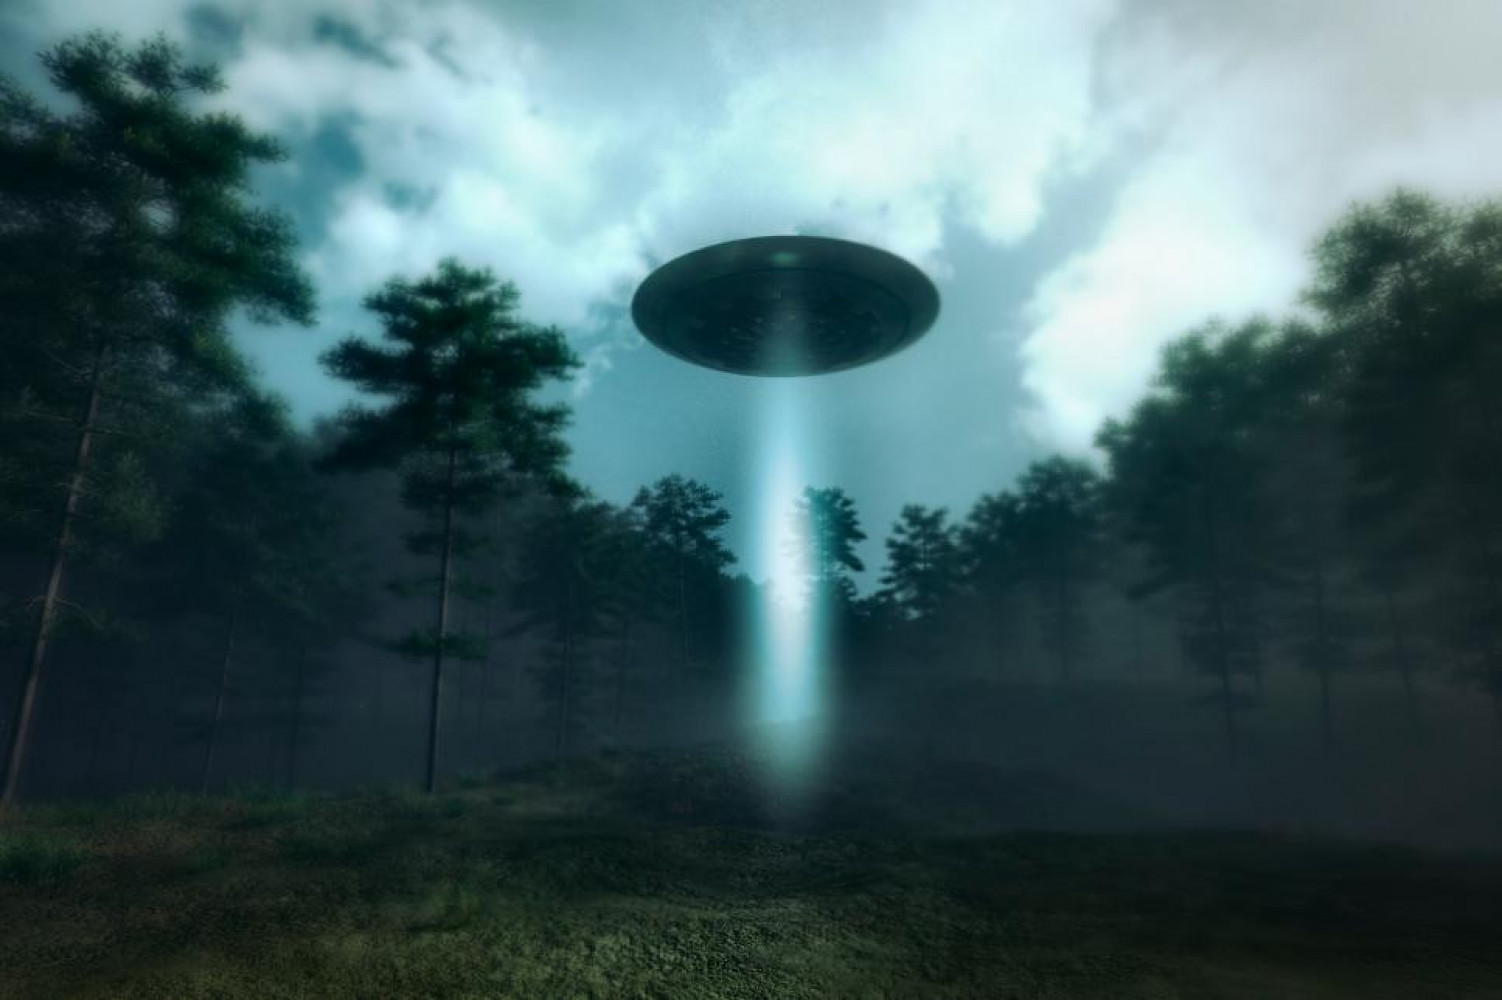 Dehşet verici UFO karşılaşmaları